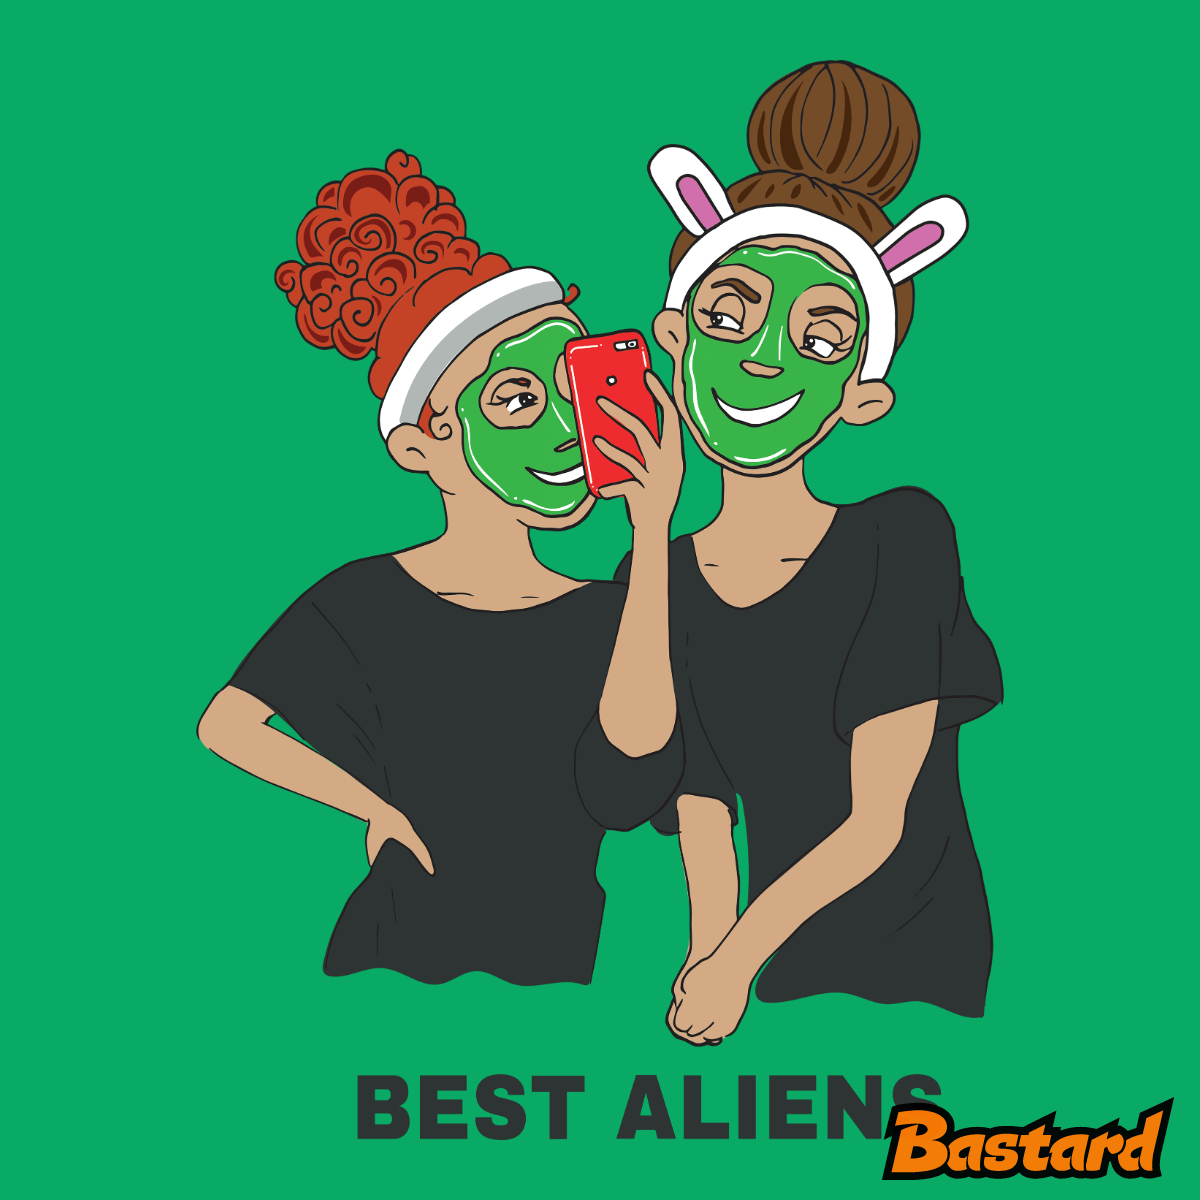 Best aliens